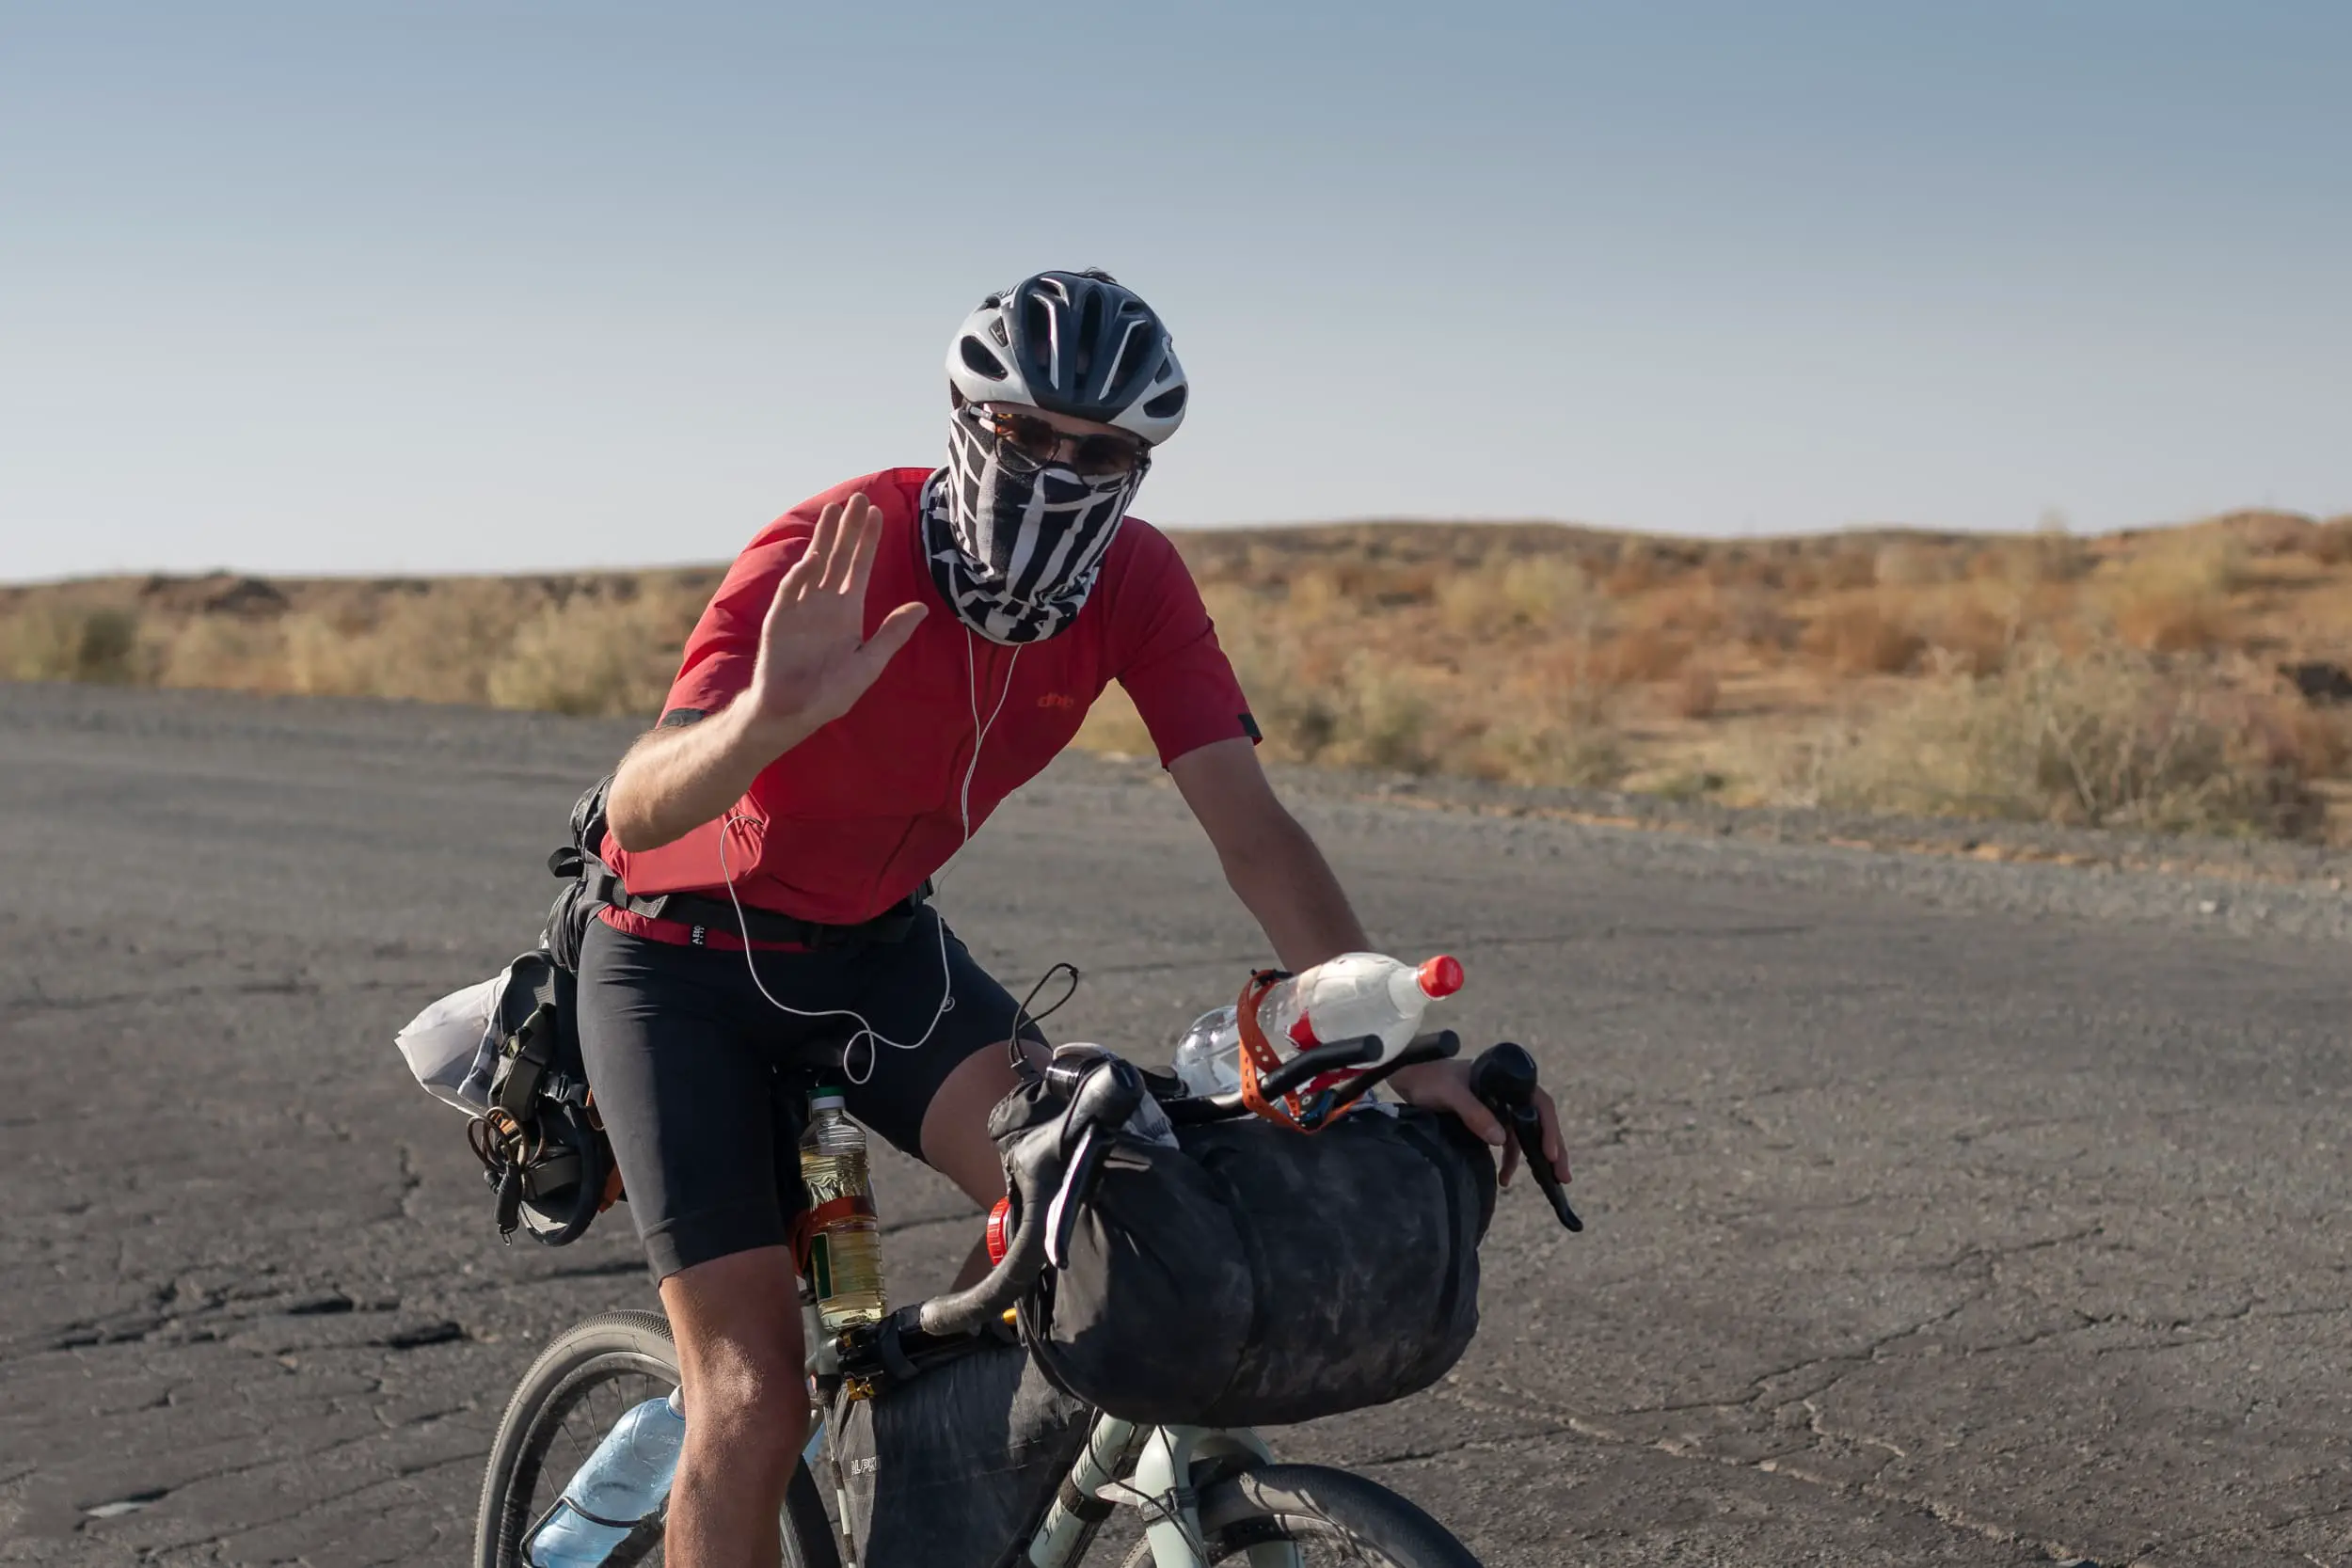 Andrew cycling the Kysylkum desert